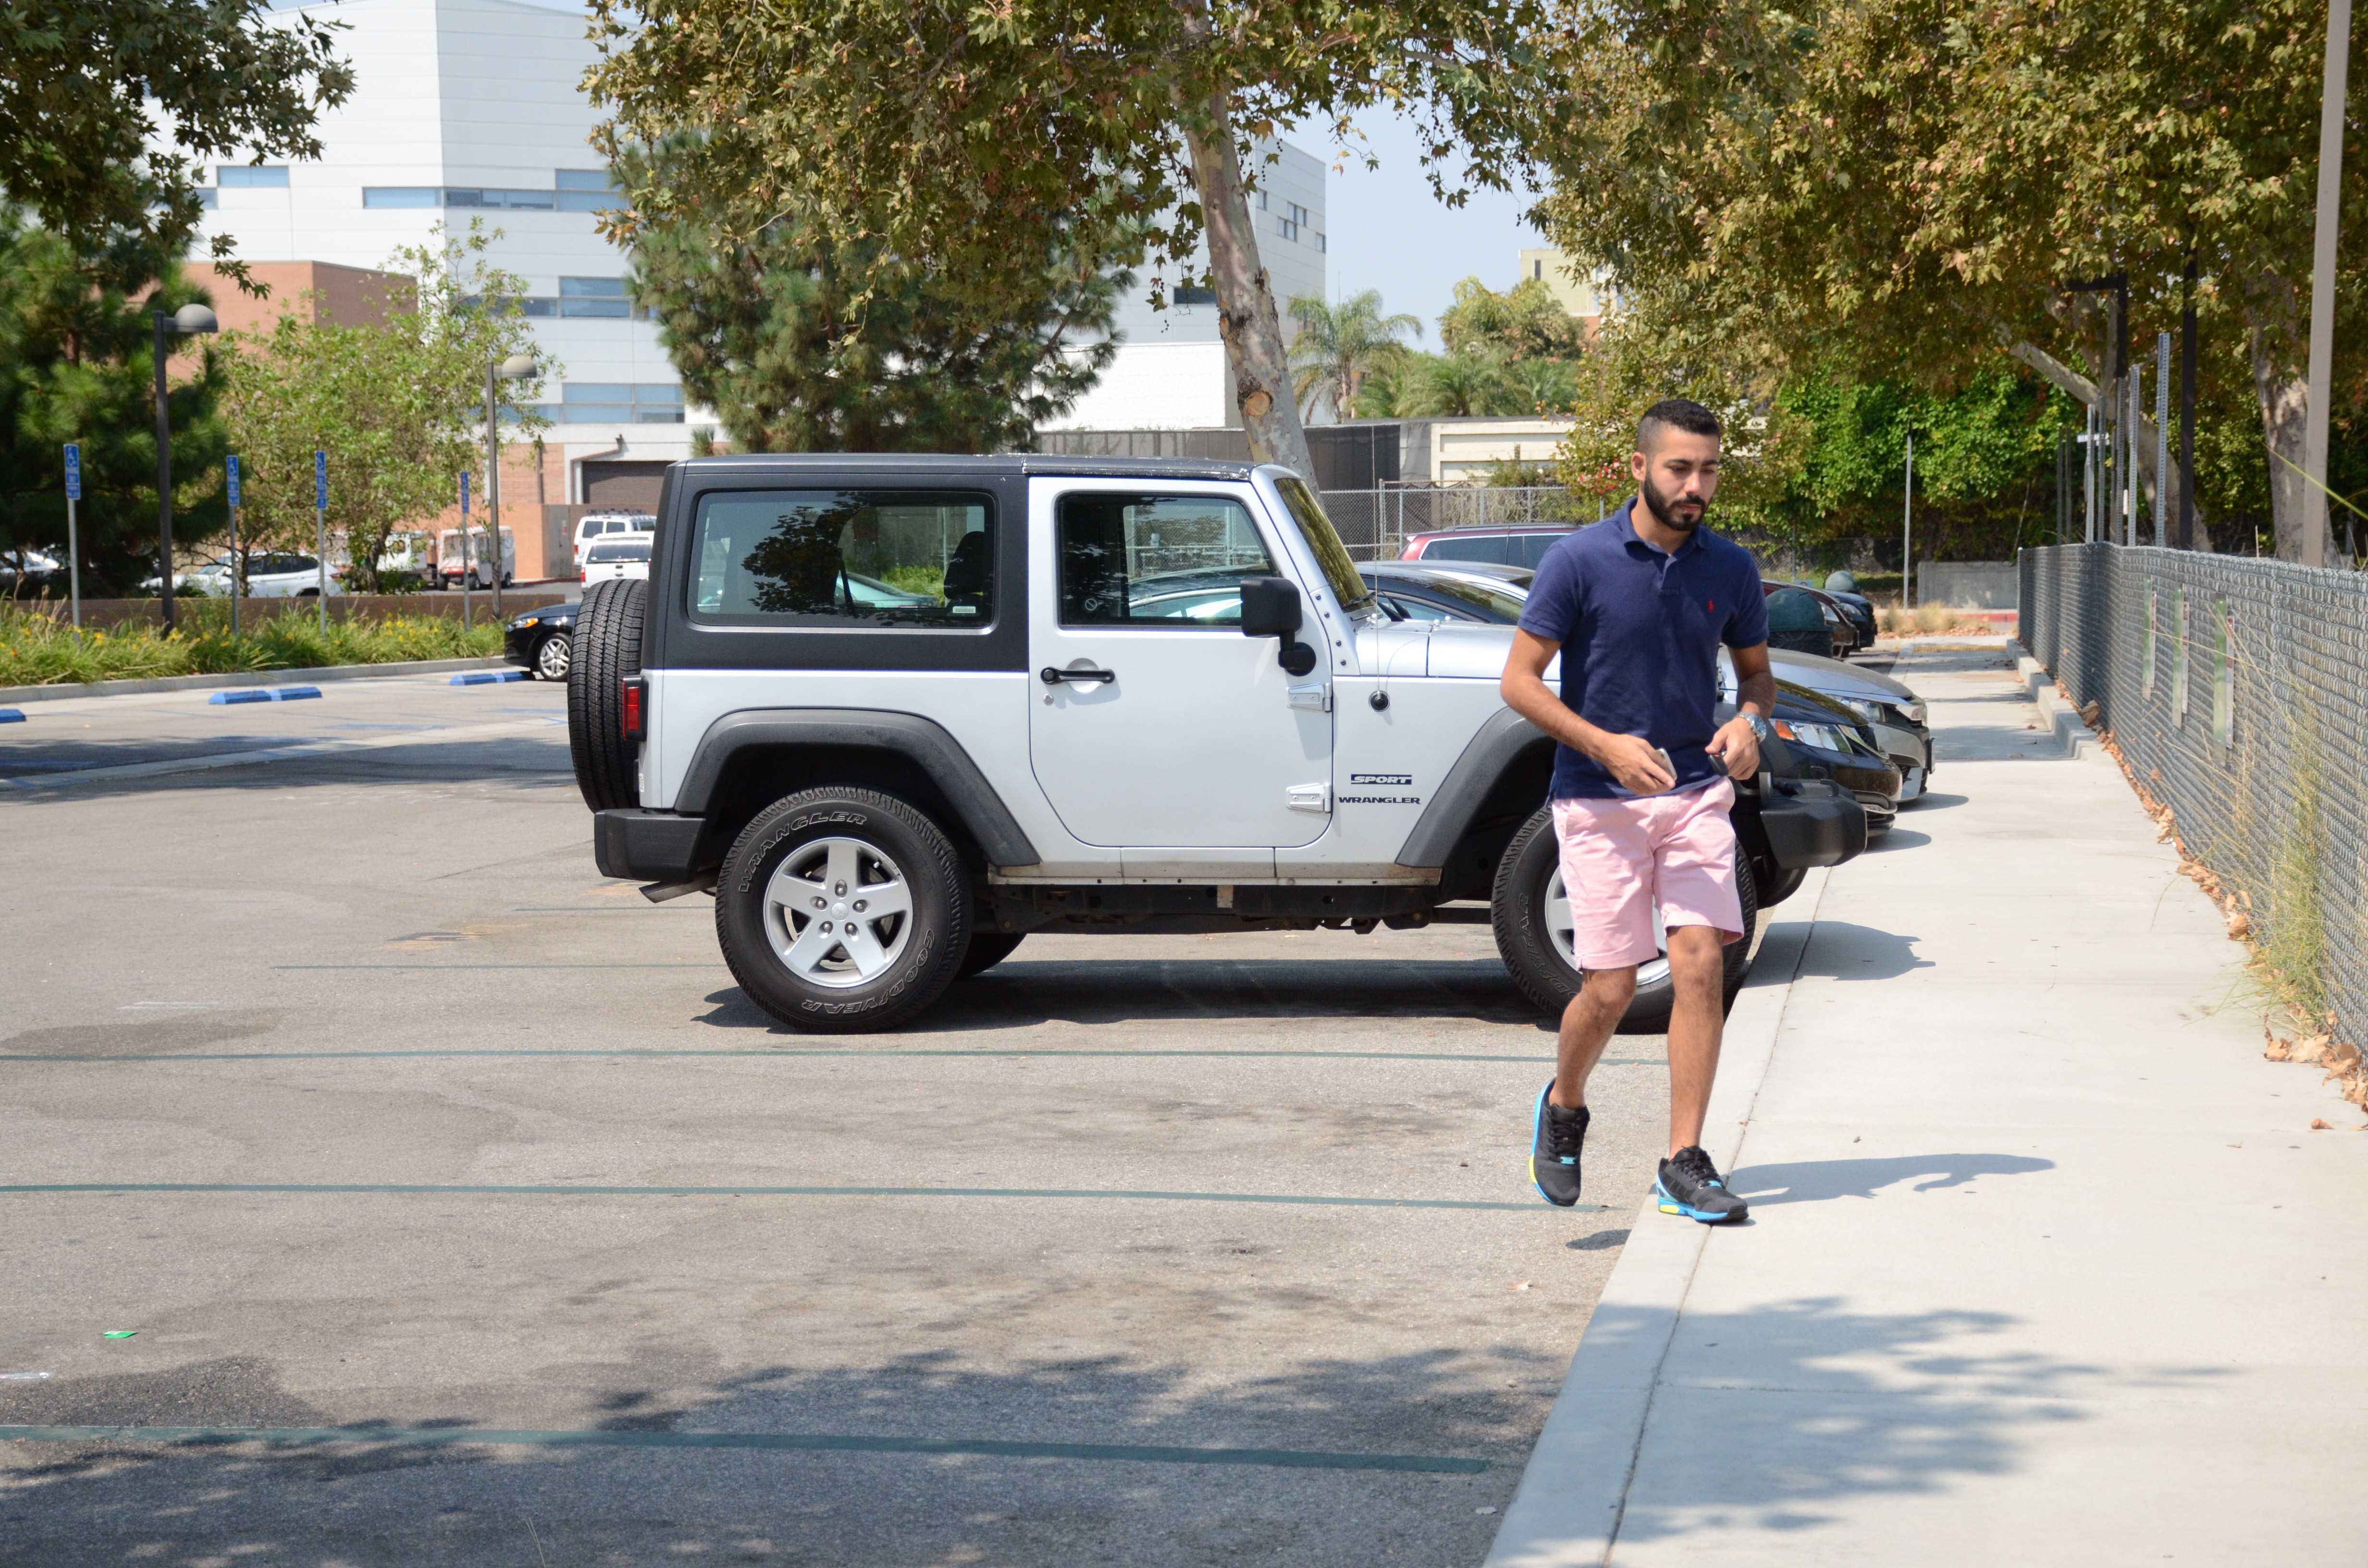 Man walks away from car after parking